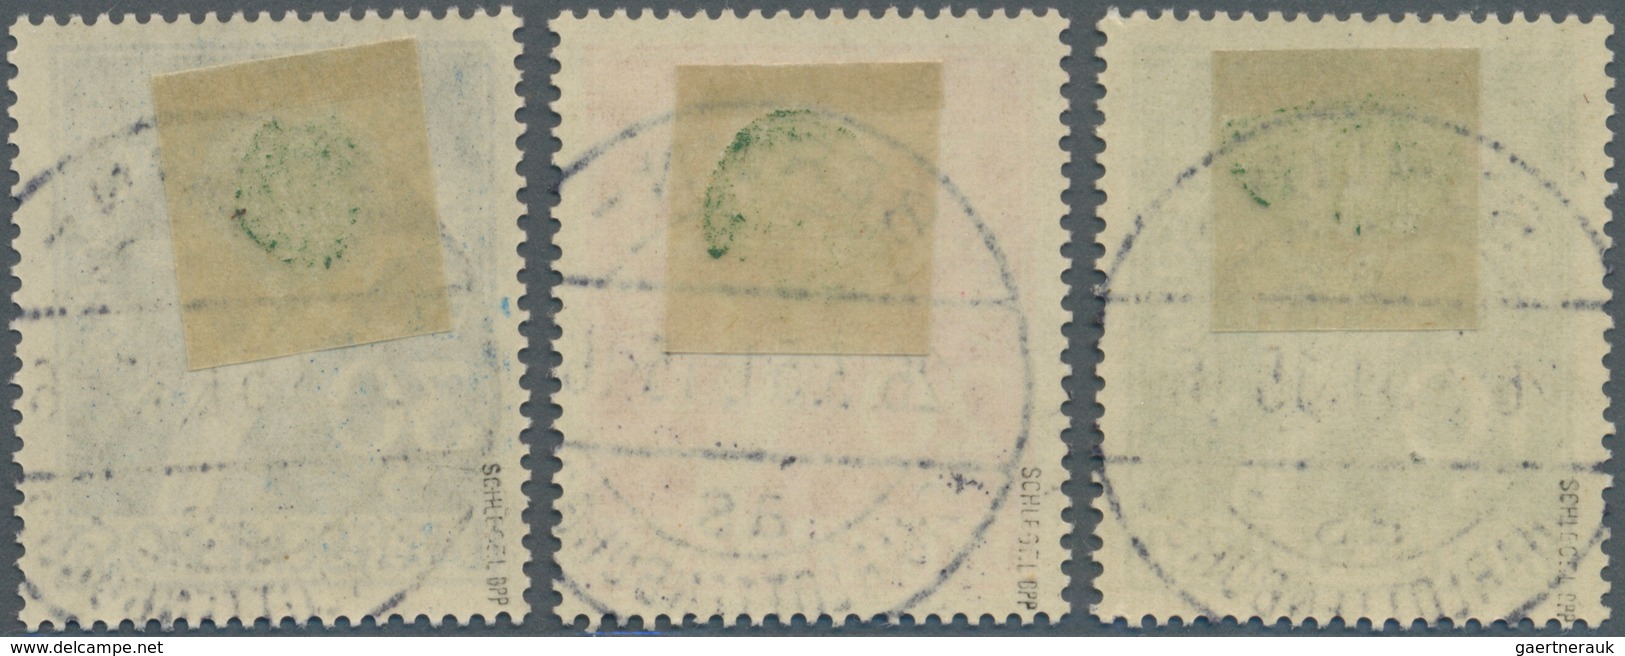 Berlin: 1949, 10 - 30 Pf „Währungsgeschädigte", Nahezu Zentrisch Gestempelter Satz Der Berliner Vers - Used Stamps